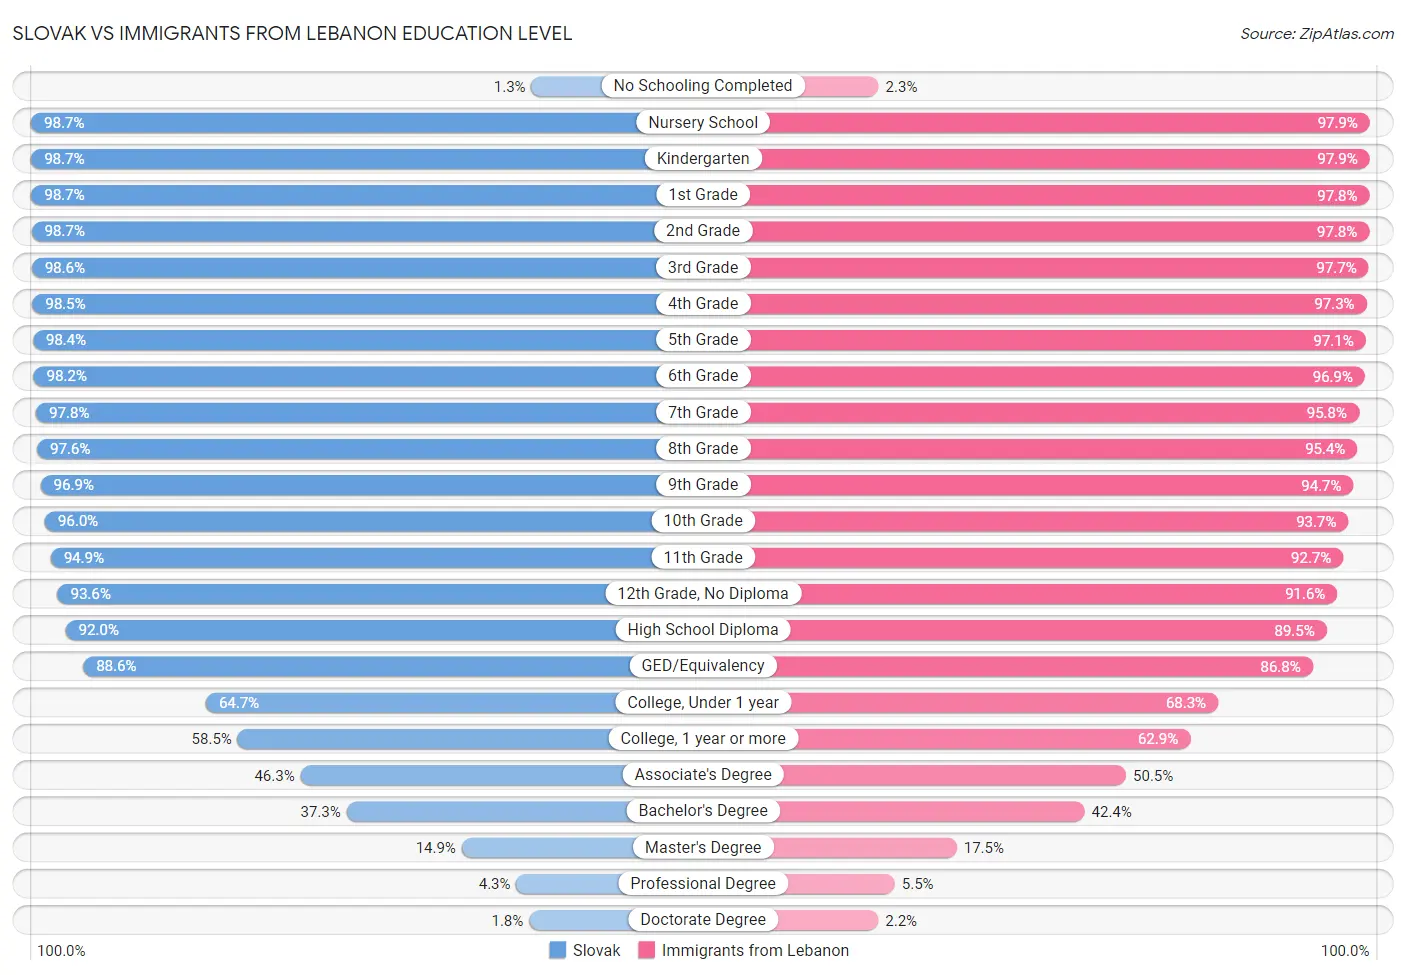 Slovak vs Immigrants from Lebanon Education Level